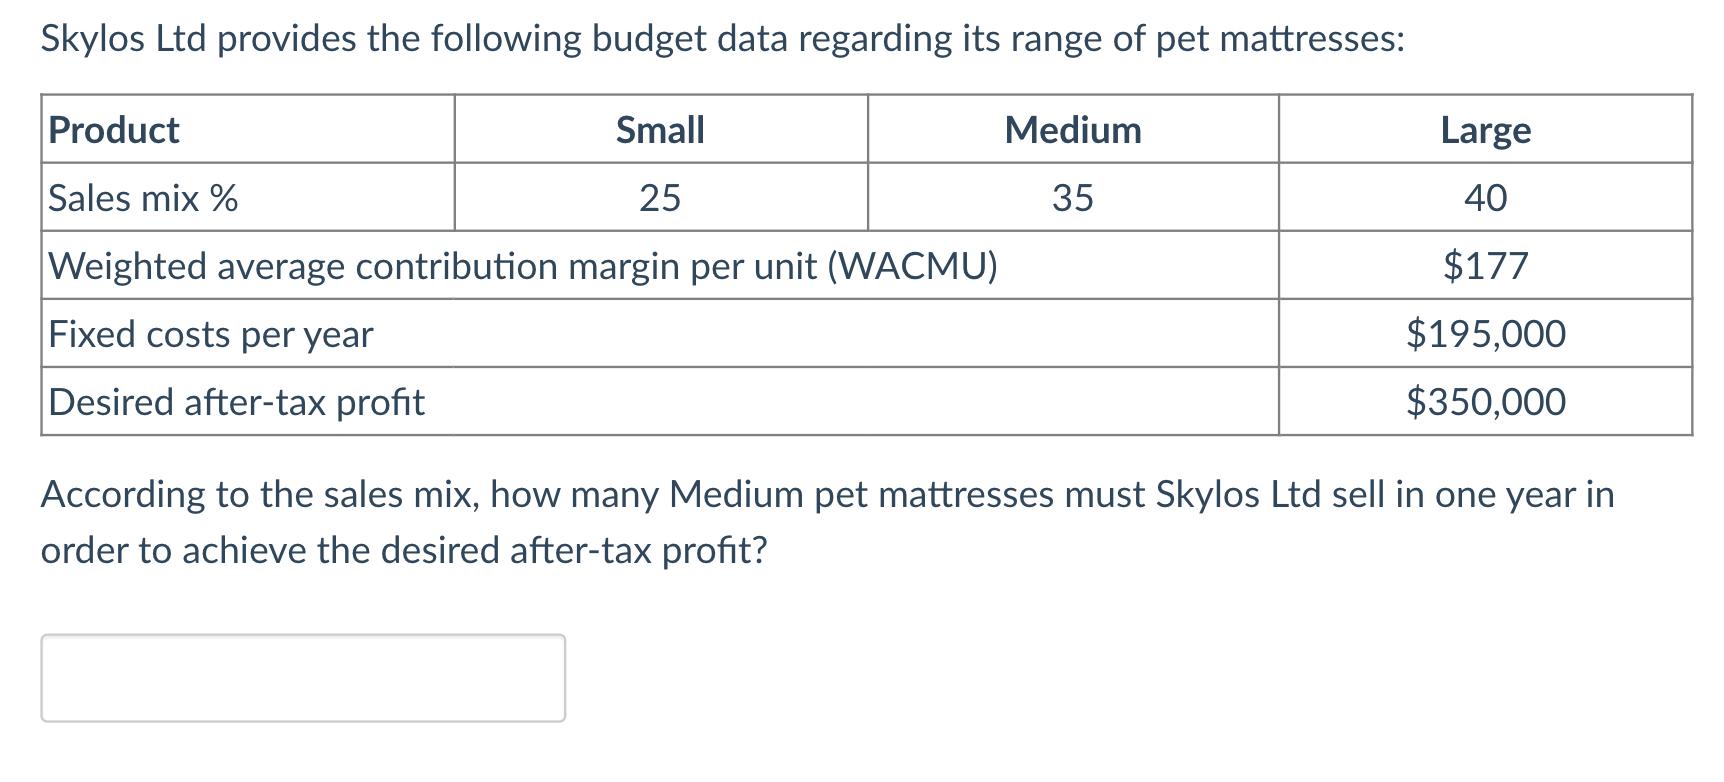 Skylos Ltd provides the following budget data regarding its range of pet mattresses: Product Small Medium Large Sales mix % 2